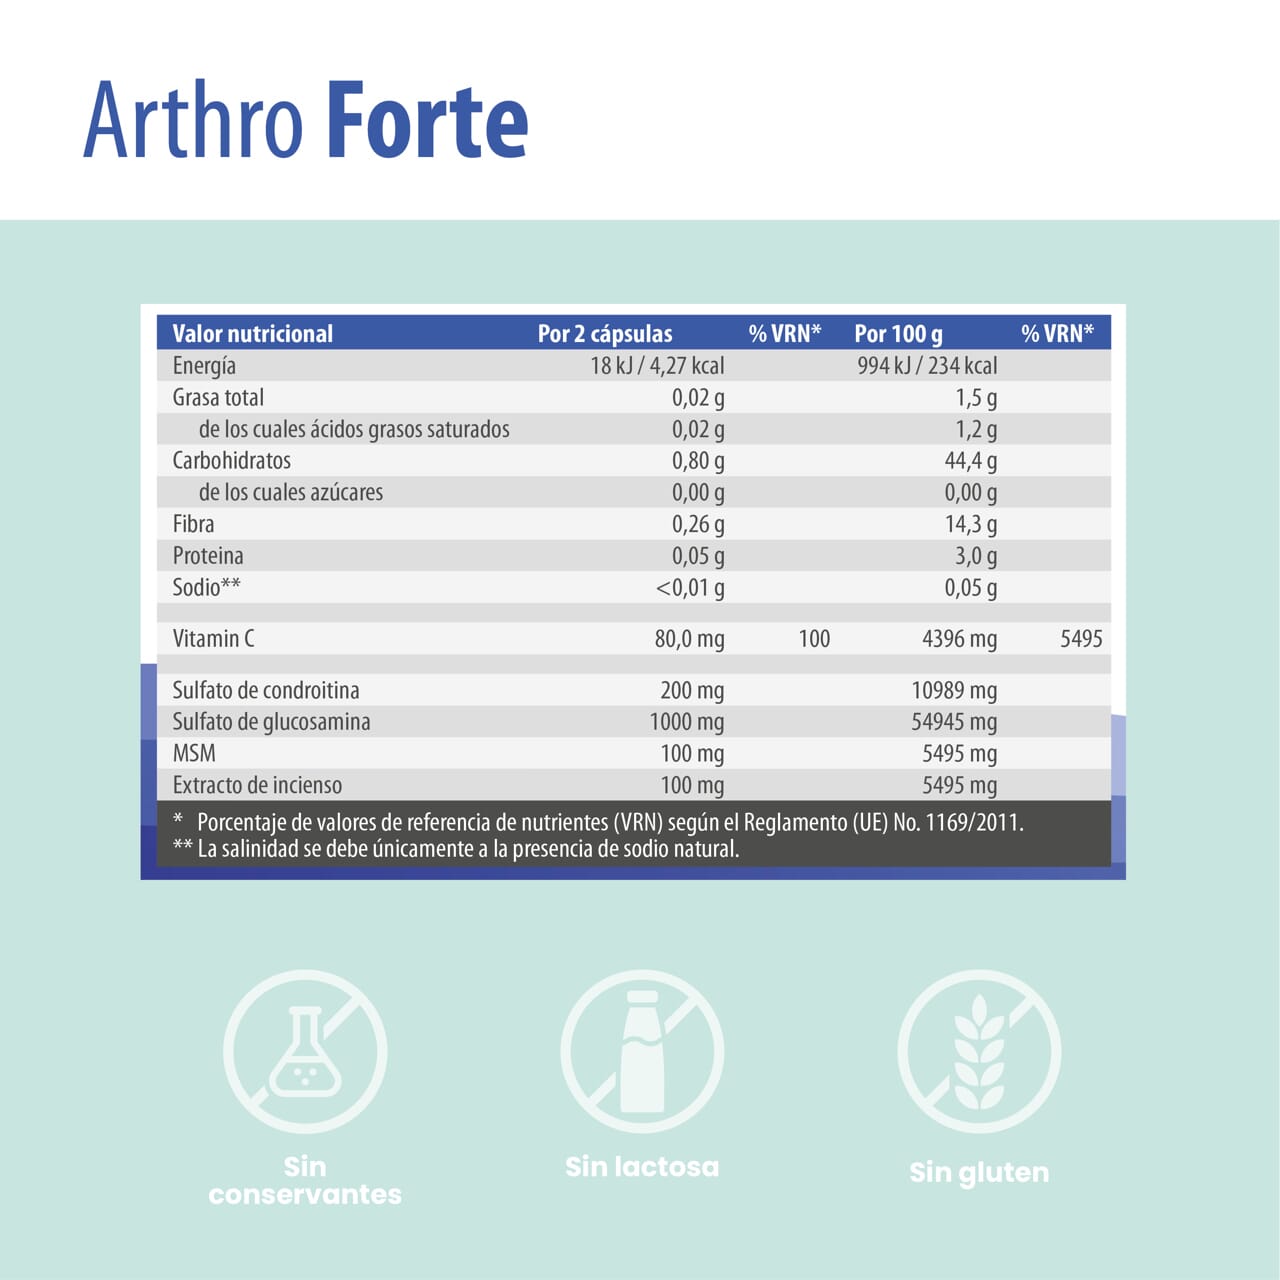 SanaExpert Arthro Forte